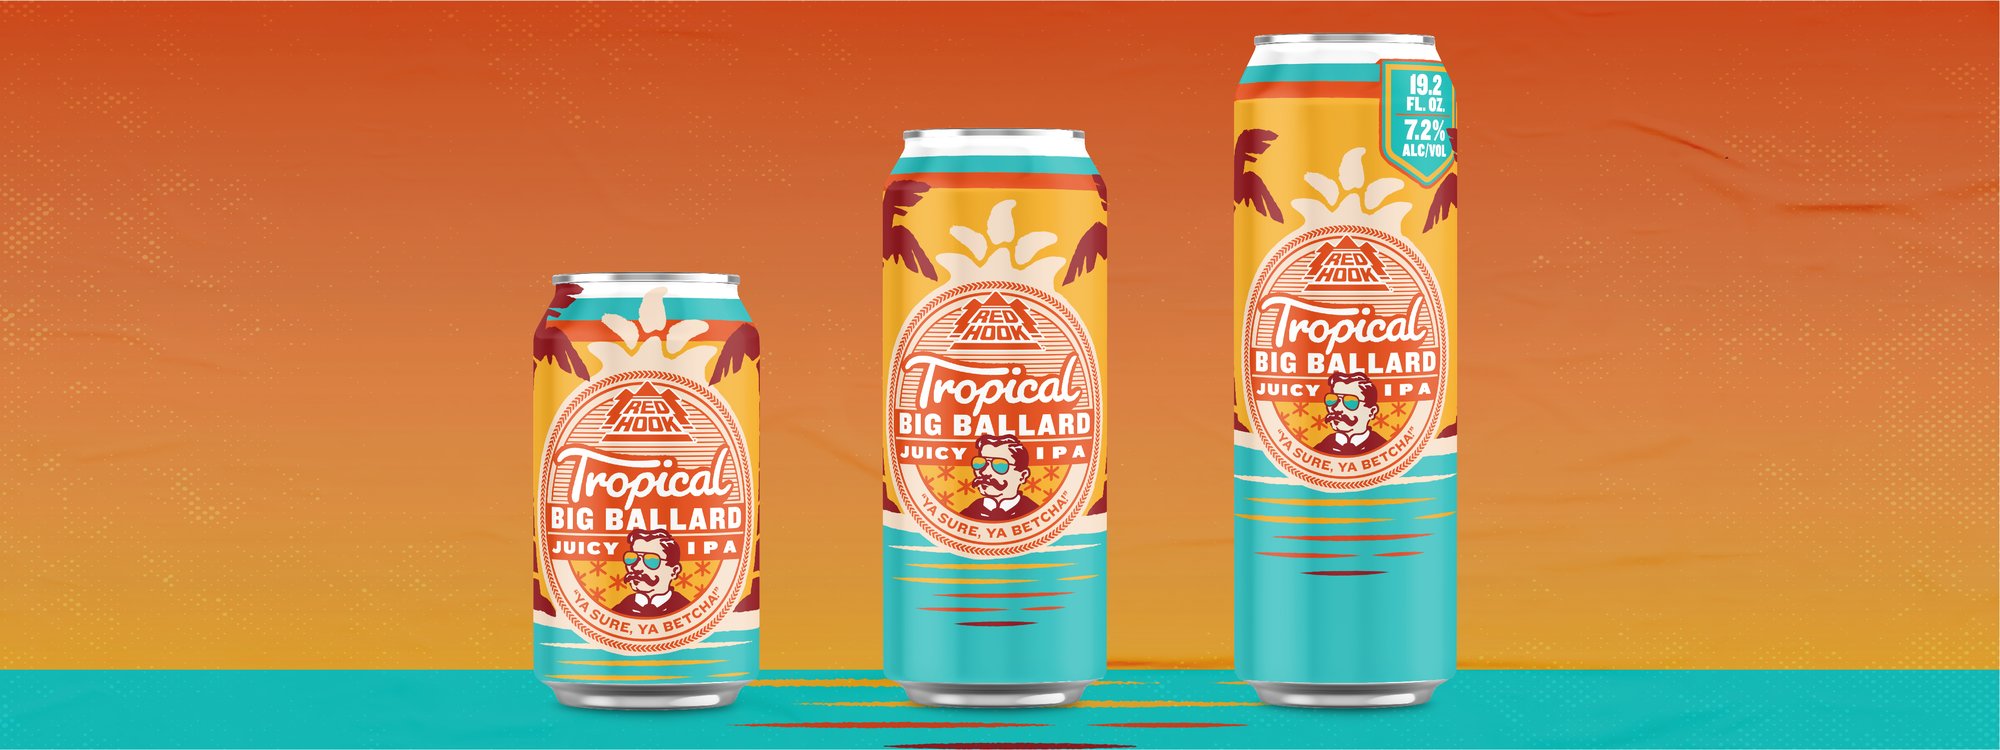 Tropical Big Ballard Juicy IPA cans on orange and blue background